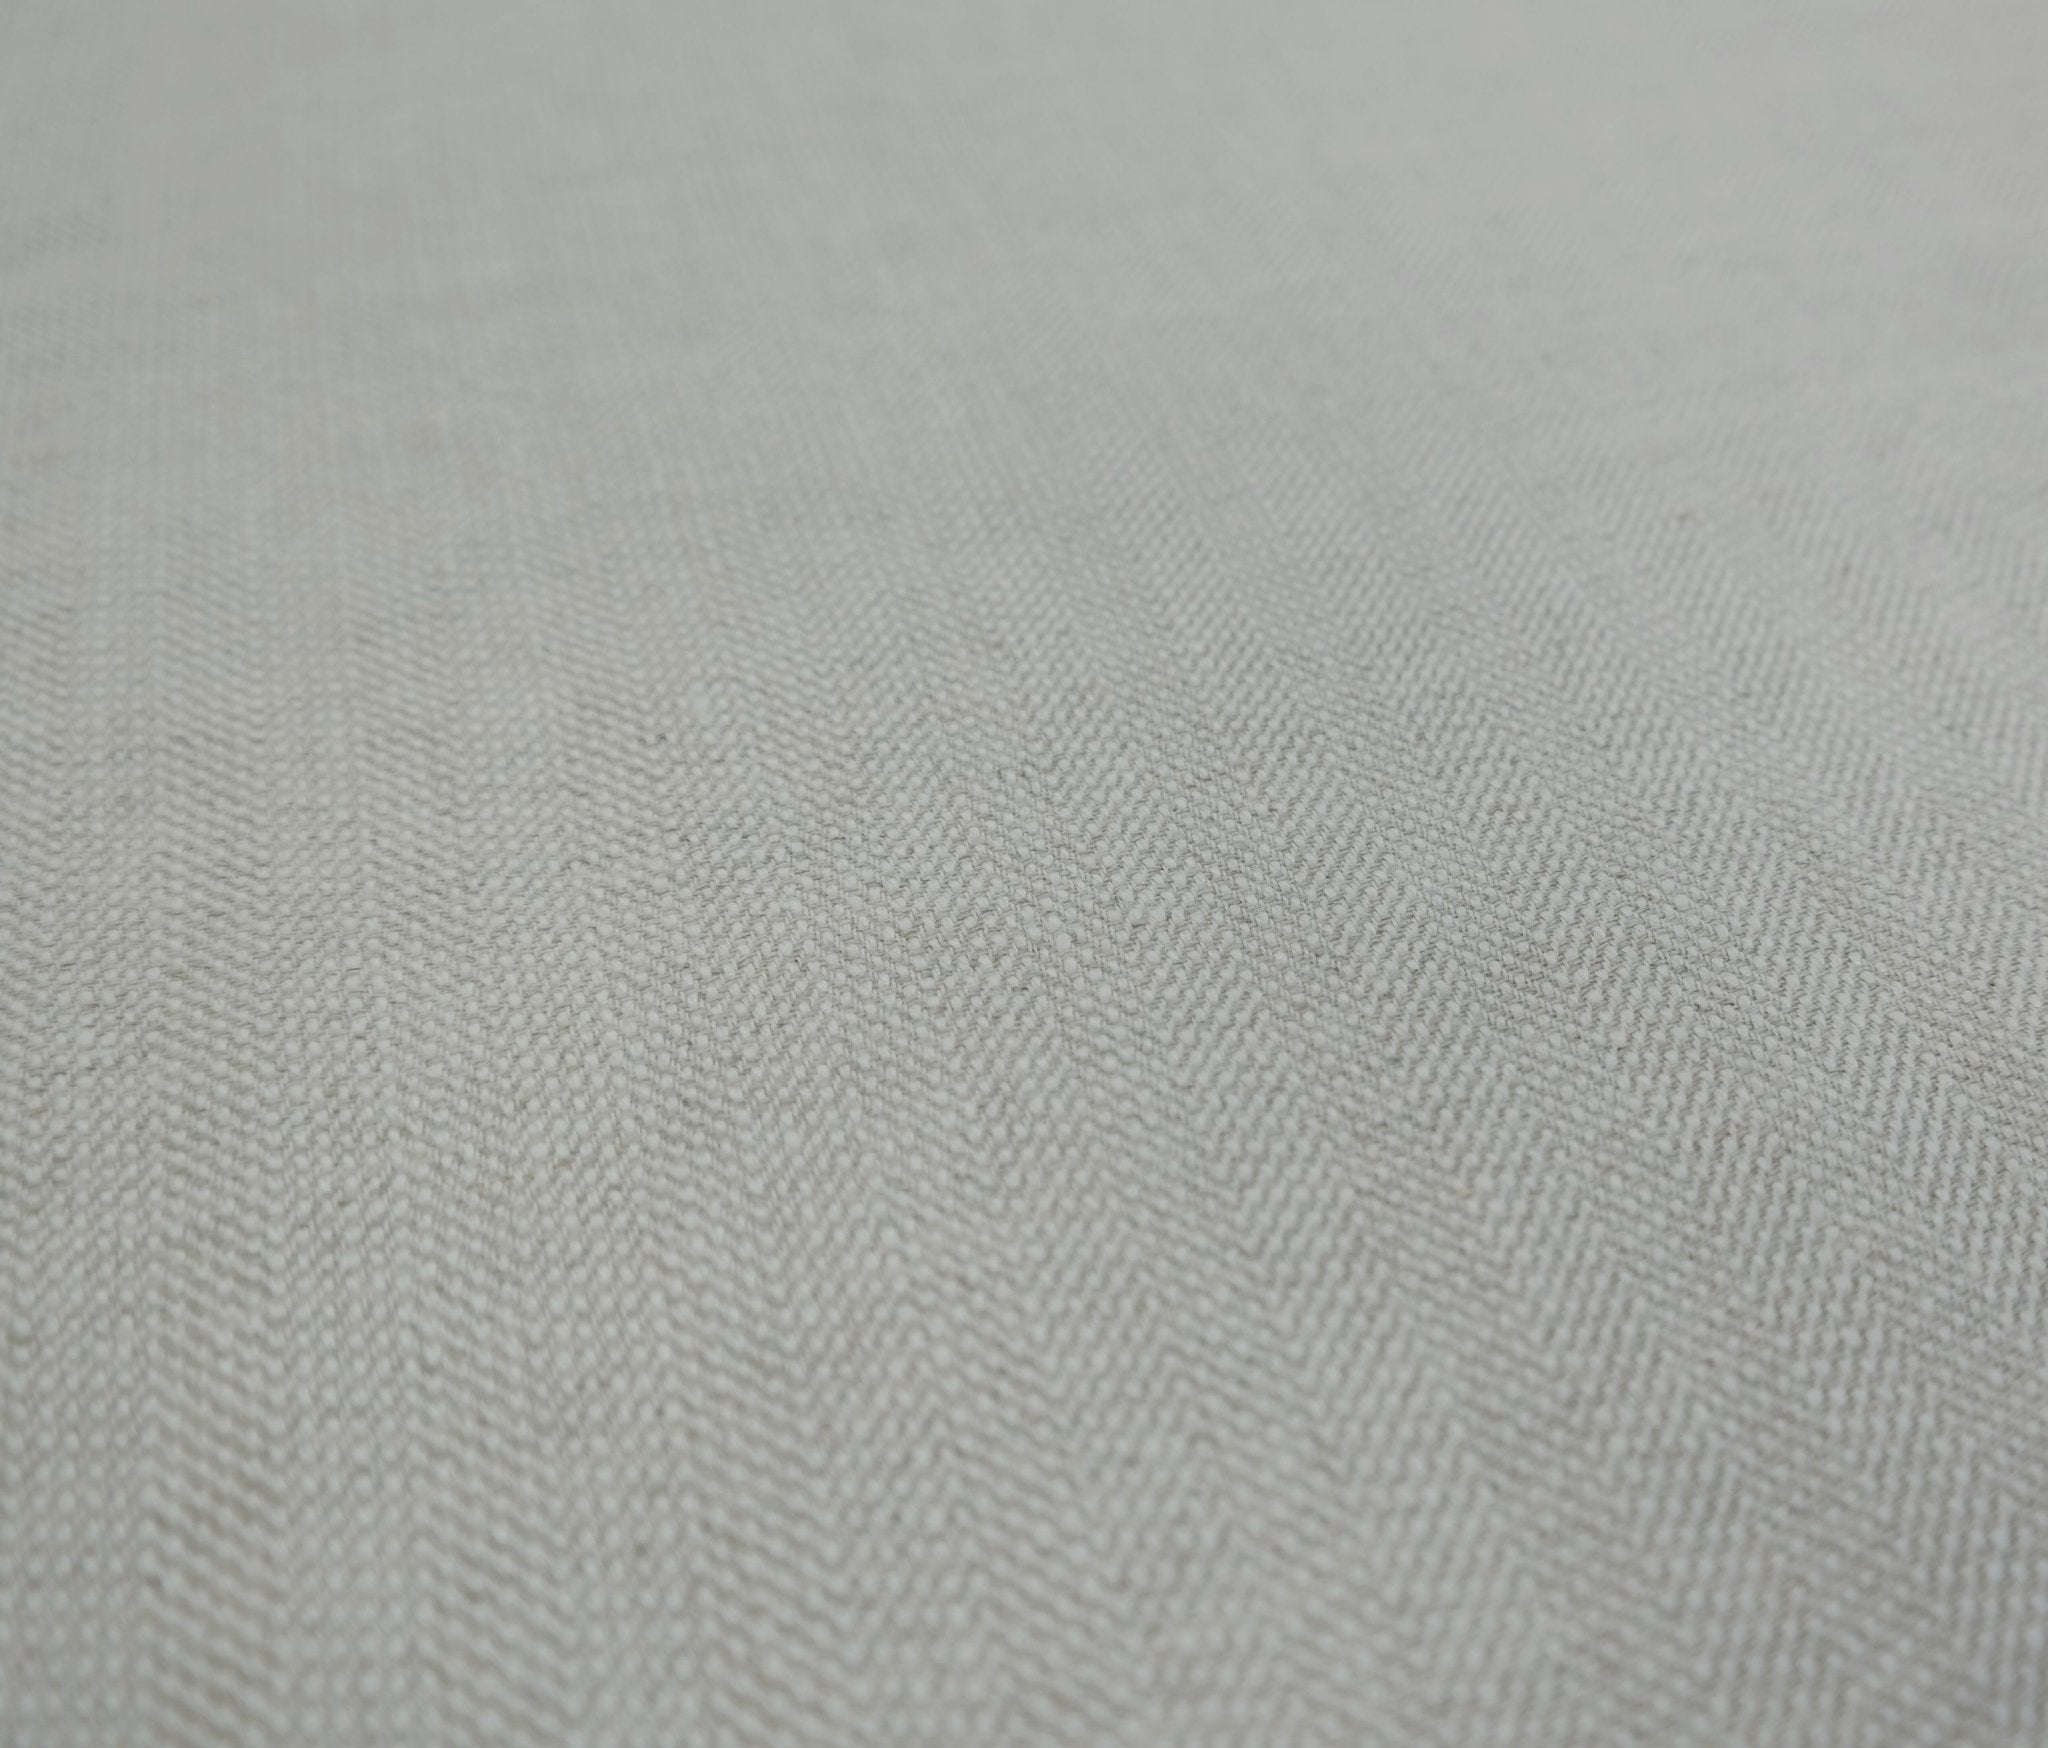 Linen Fabric HBT Herringbone Twill Heavy Weight 7299 - The Linen Lab - Natural 7299